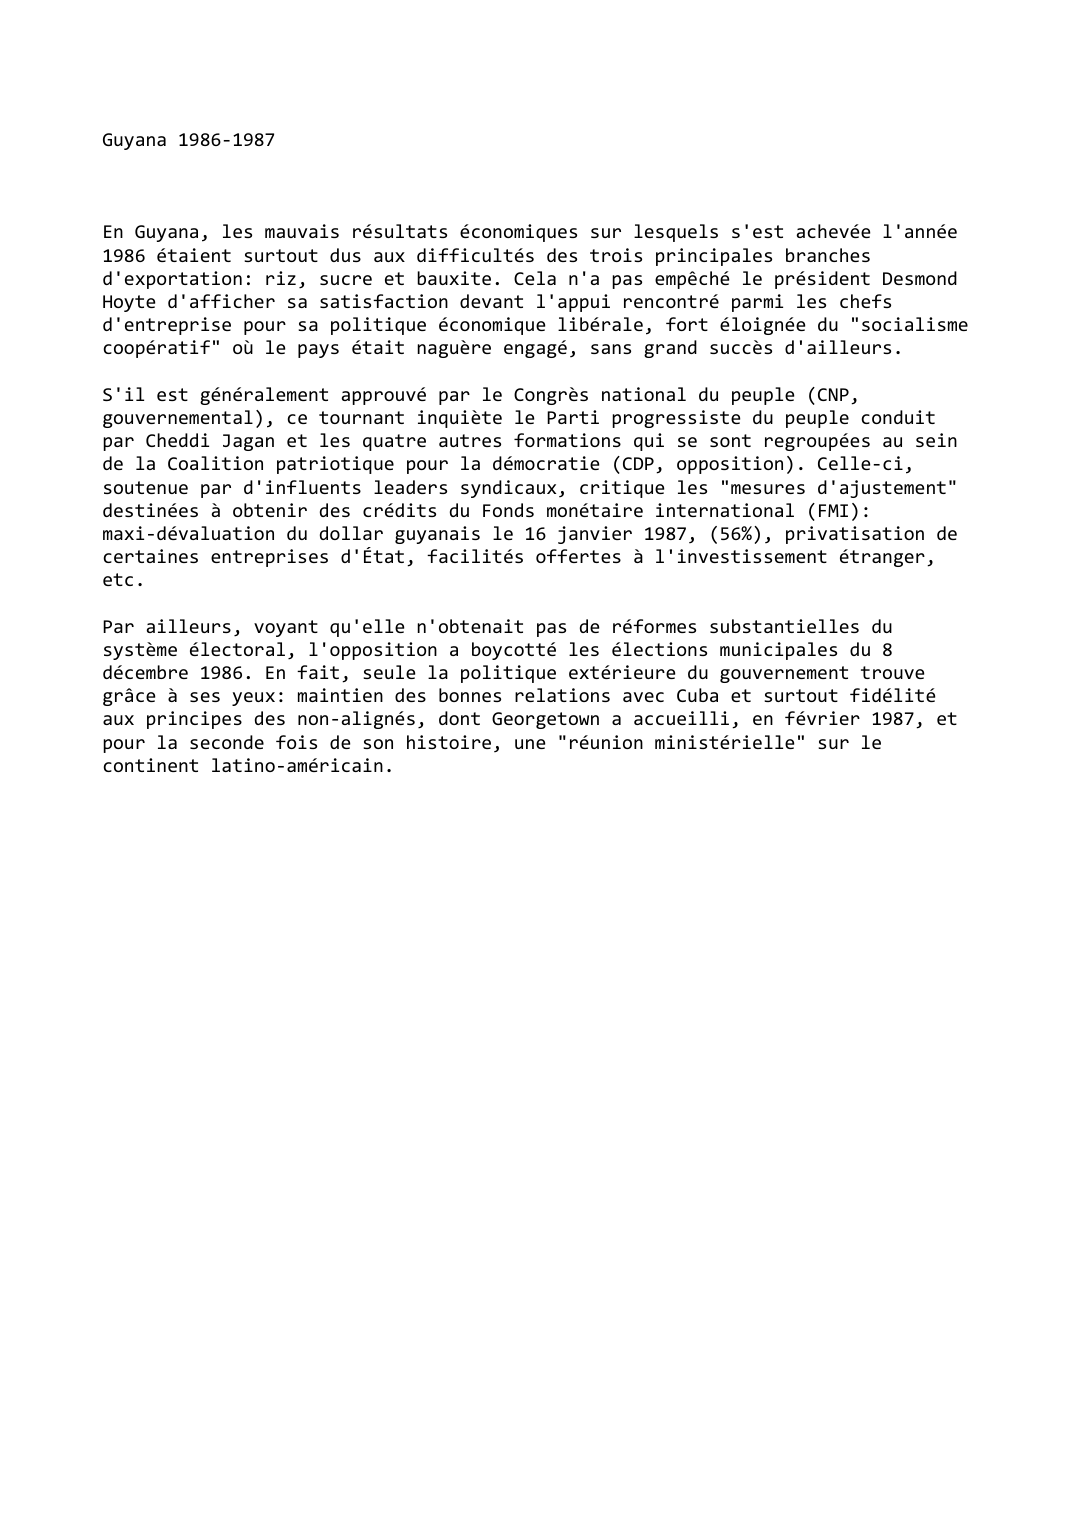 Prévisualisation du document Guyana (1986-1987)